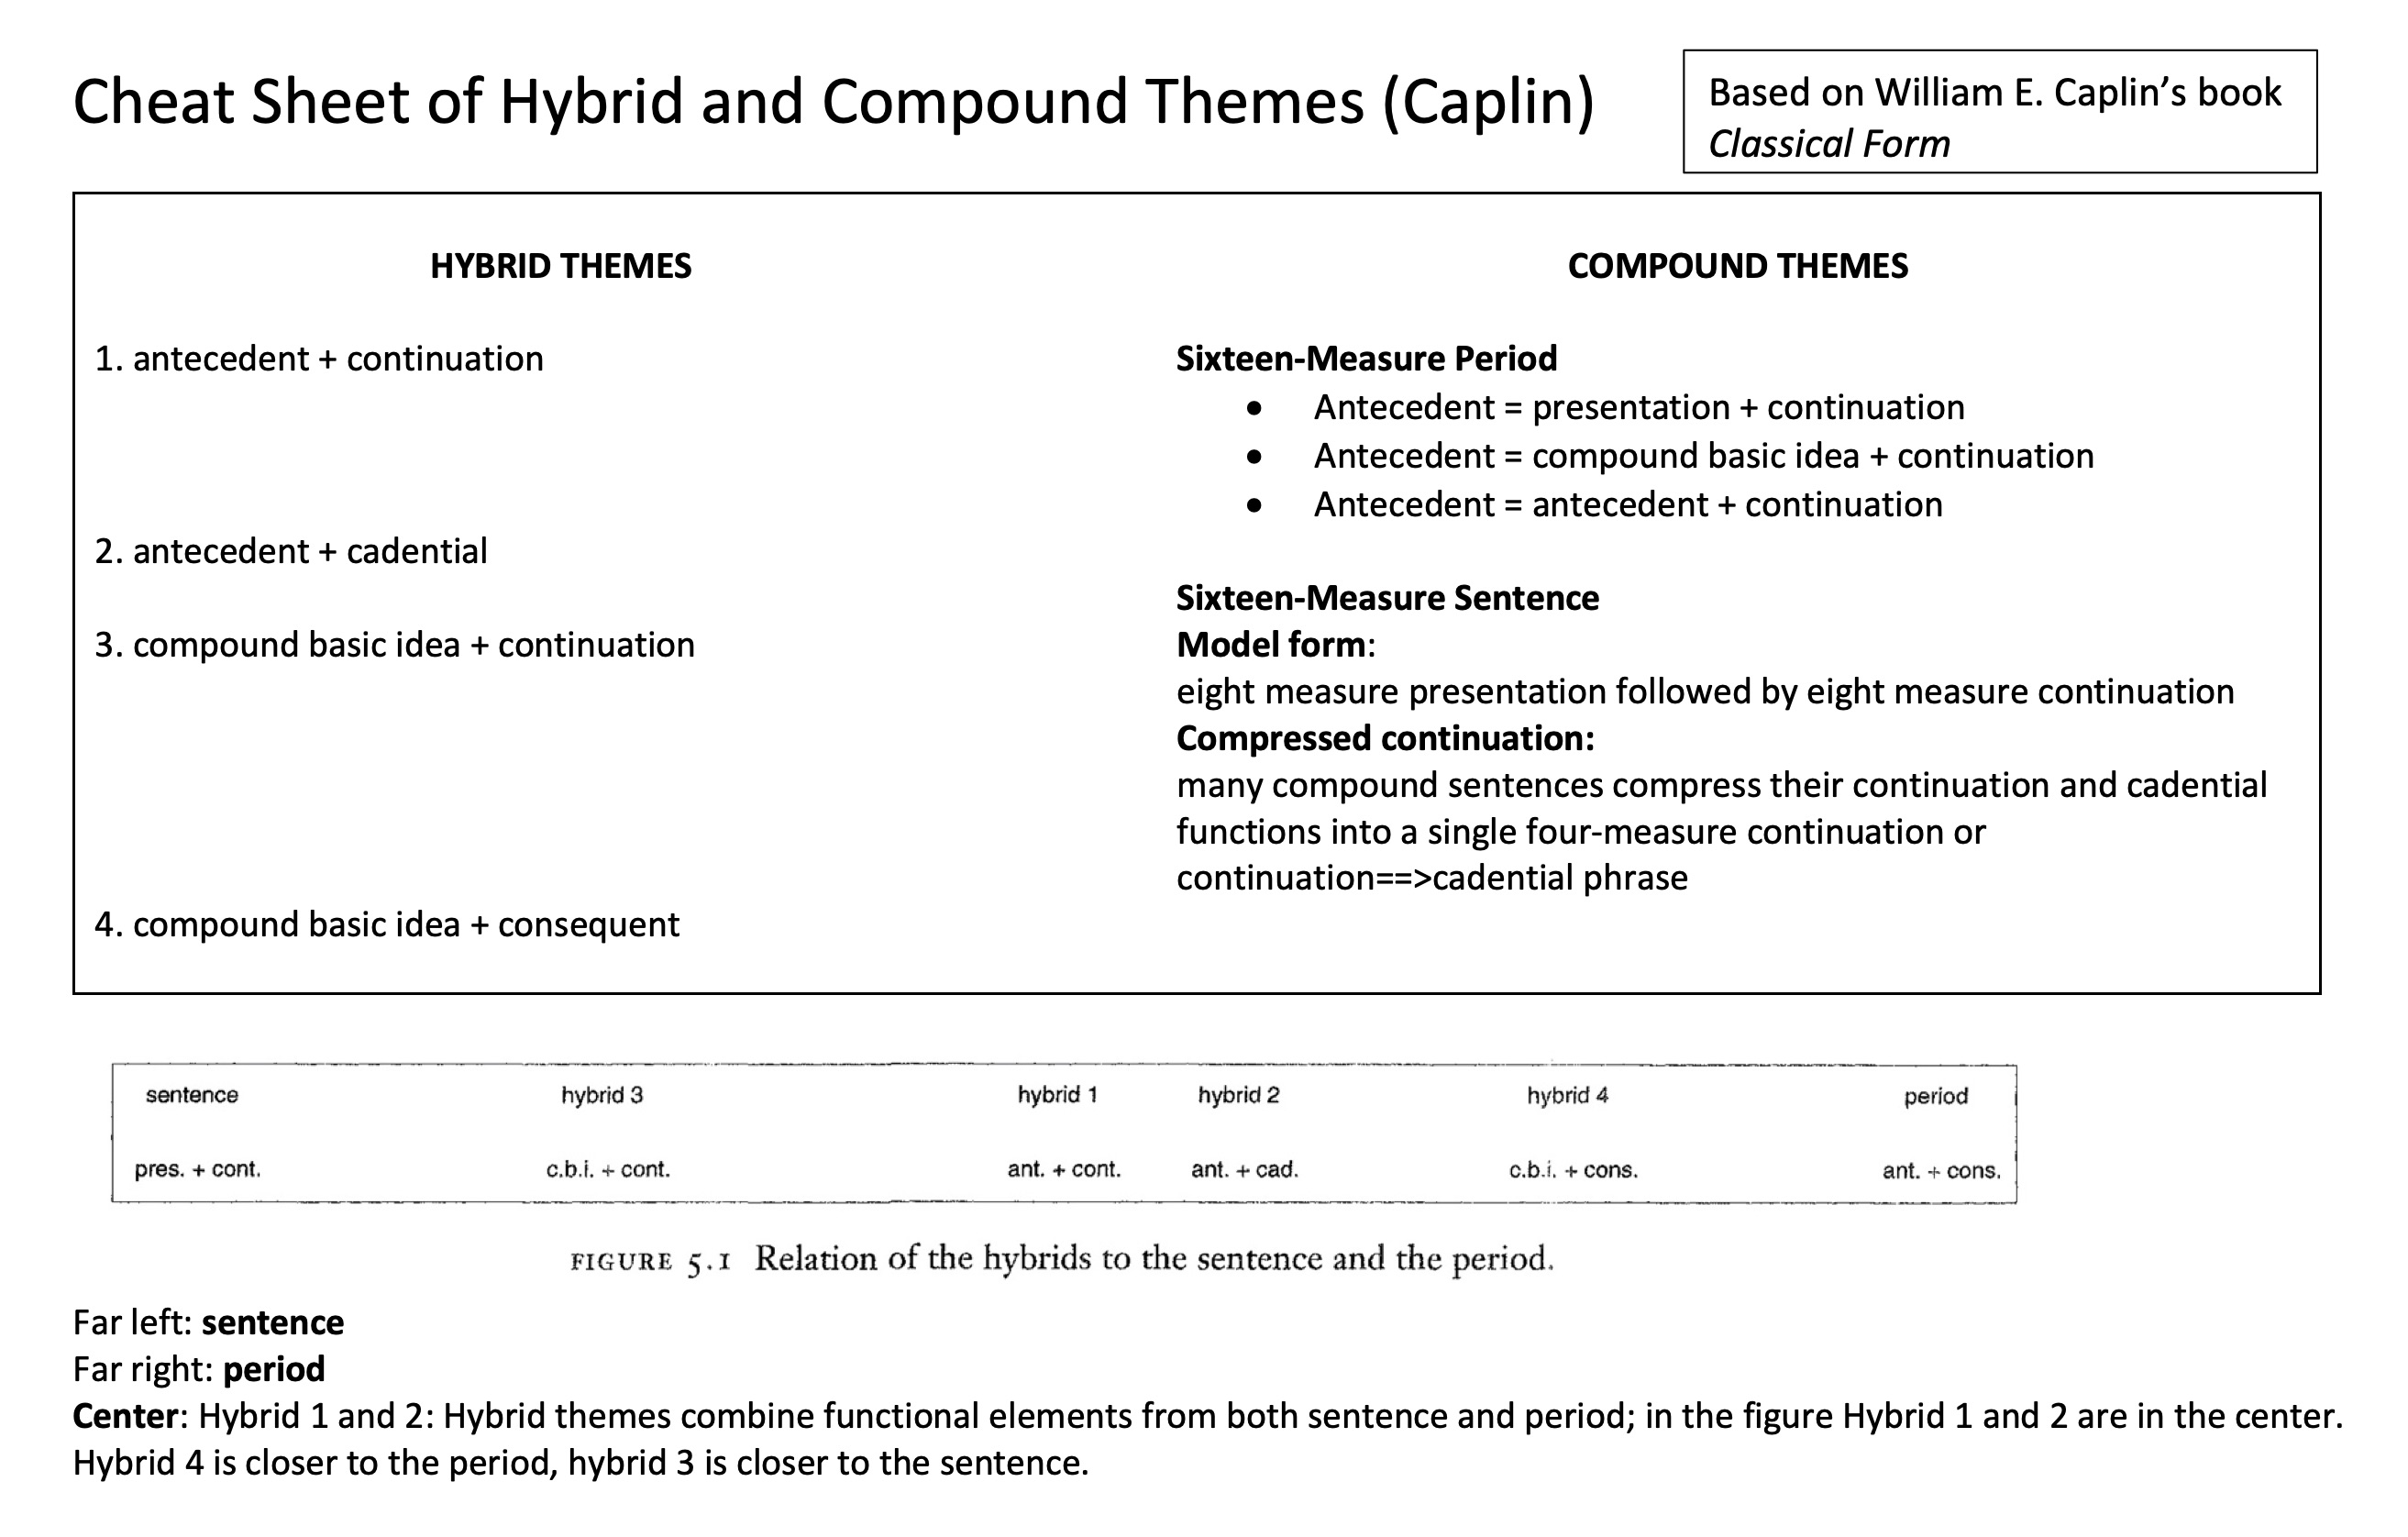 Cheat Sheet Hybrid and Compound Themes (Caplin).jpg